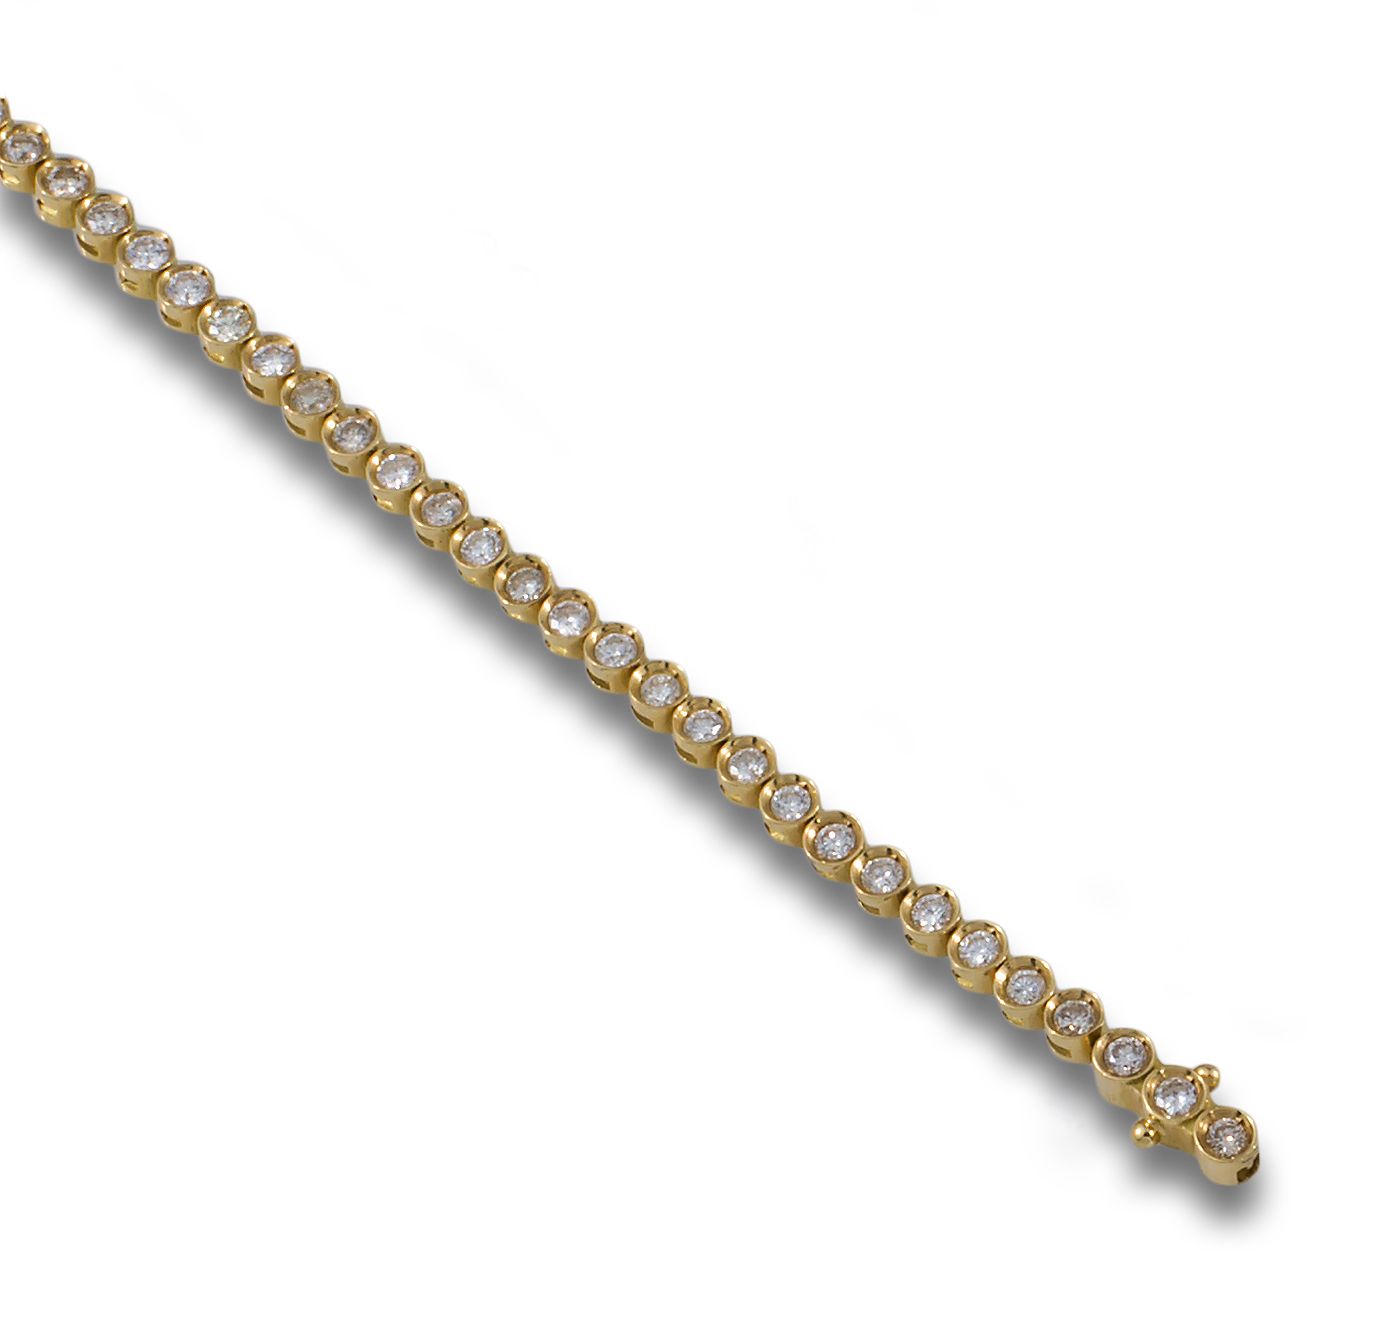 GOLD BRACELET CHATONS DIAMONDS 37 镶嵌明亮式切割钻石的18K黄金手镯，估计总重量为2.70克拉。